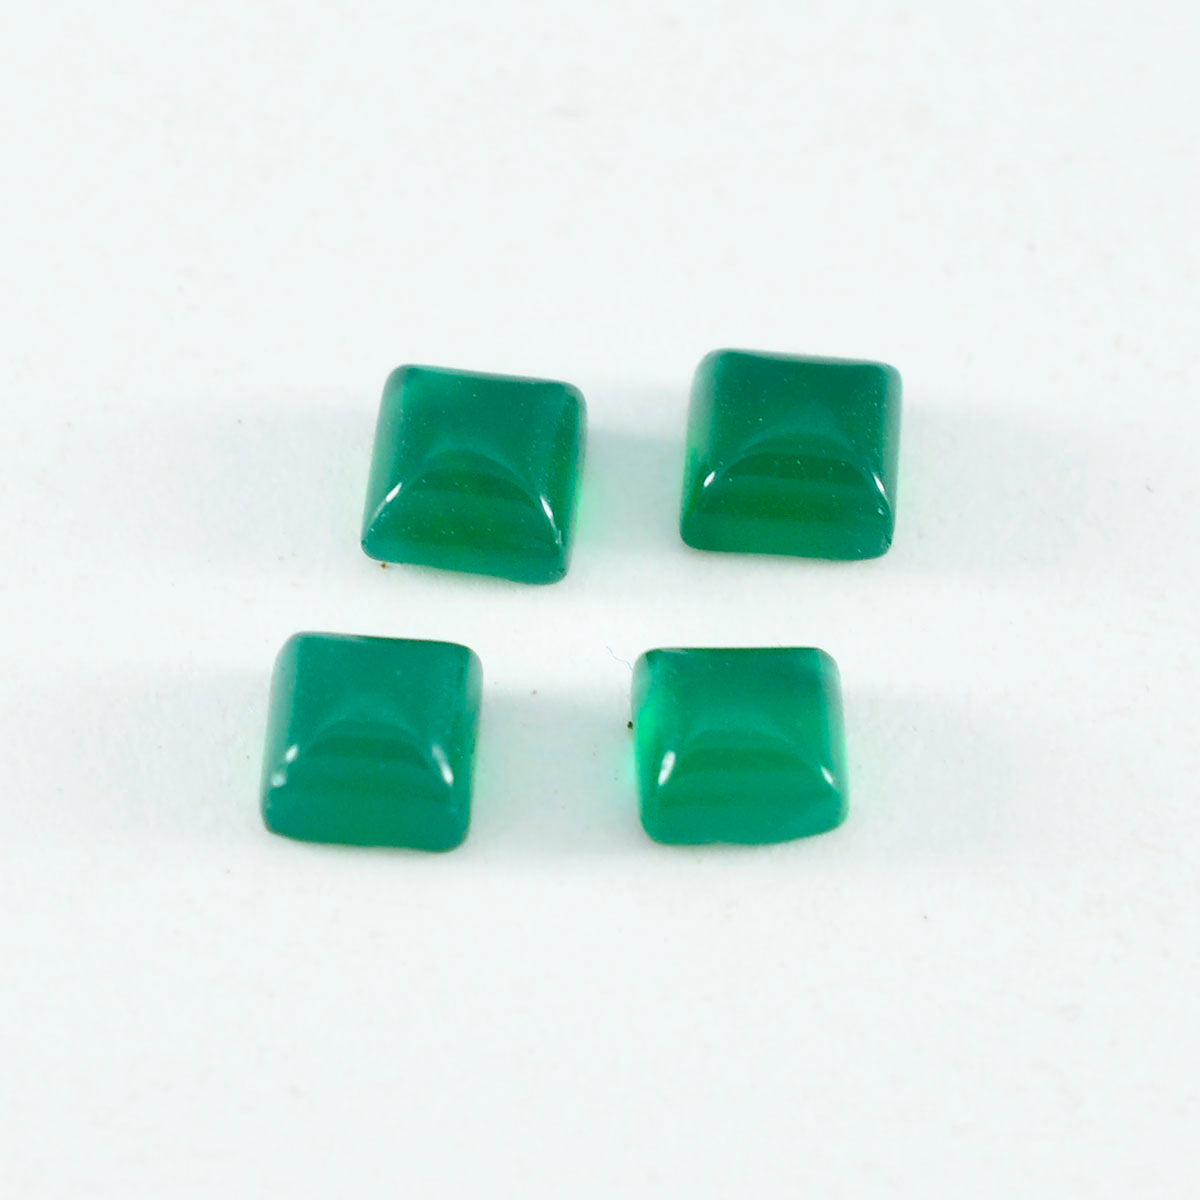 Riyogems 1PC groene onyx cabochon 6x6 mm vierkante vorm goede kwaliteit losse edelstenen